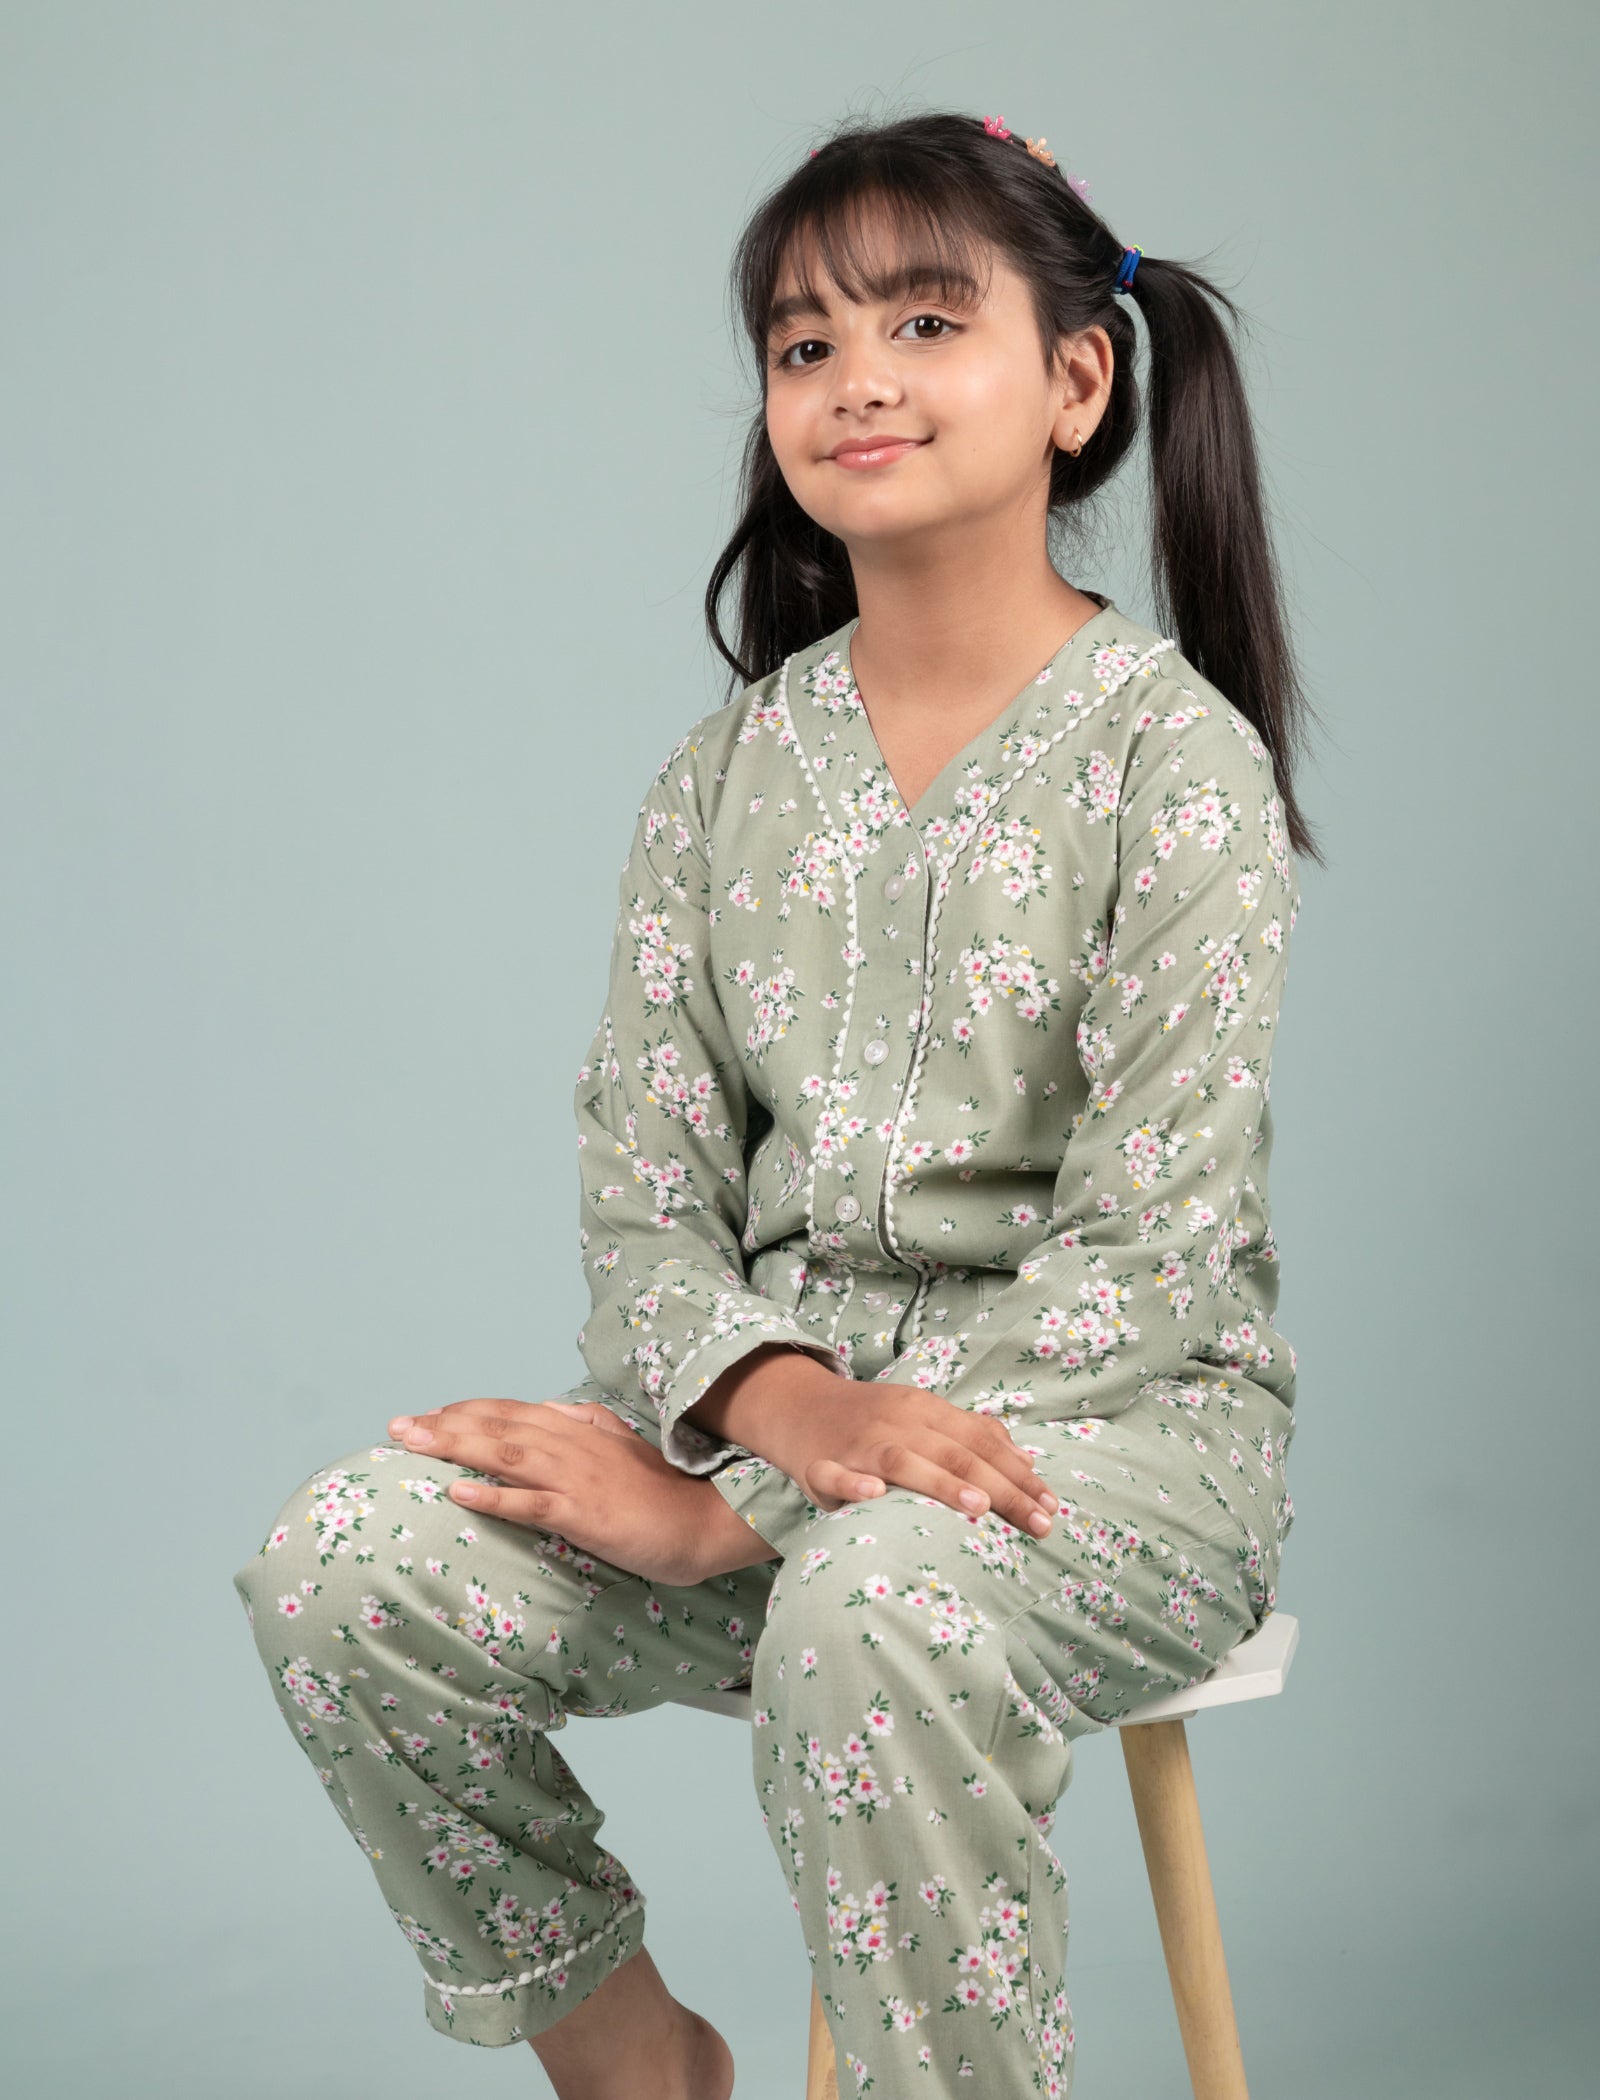 Buy Chheent Cotton Unisex Animal Printed Night Dress Suit Sleepwear Girls,  Boys (1-2 Years, Beige) at Amazon.in